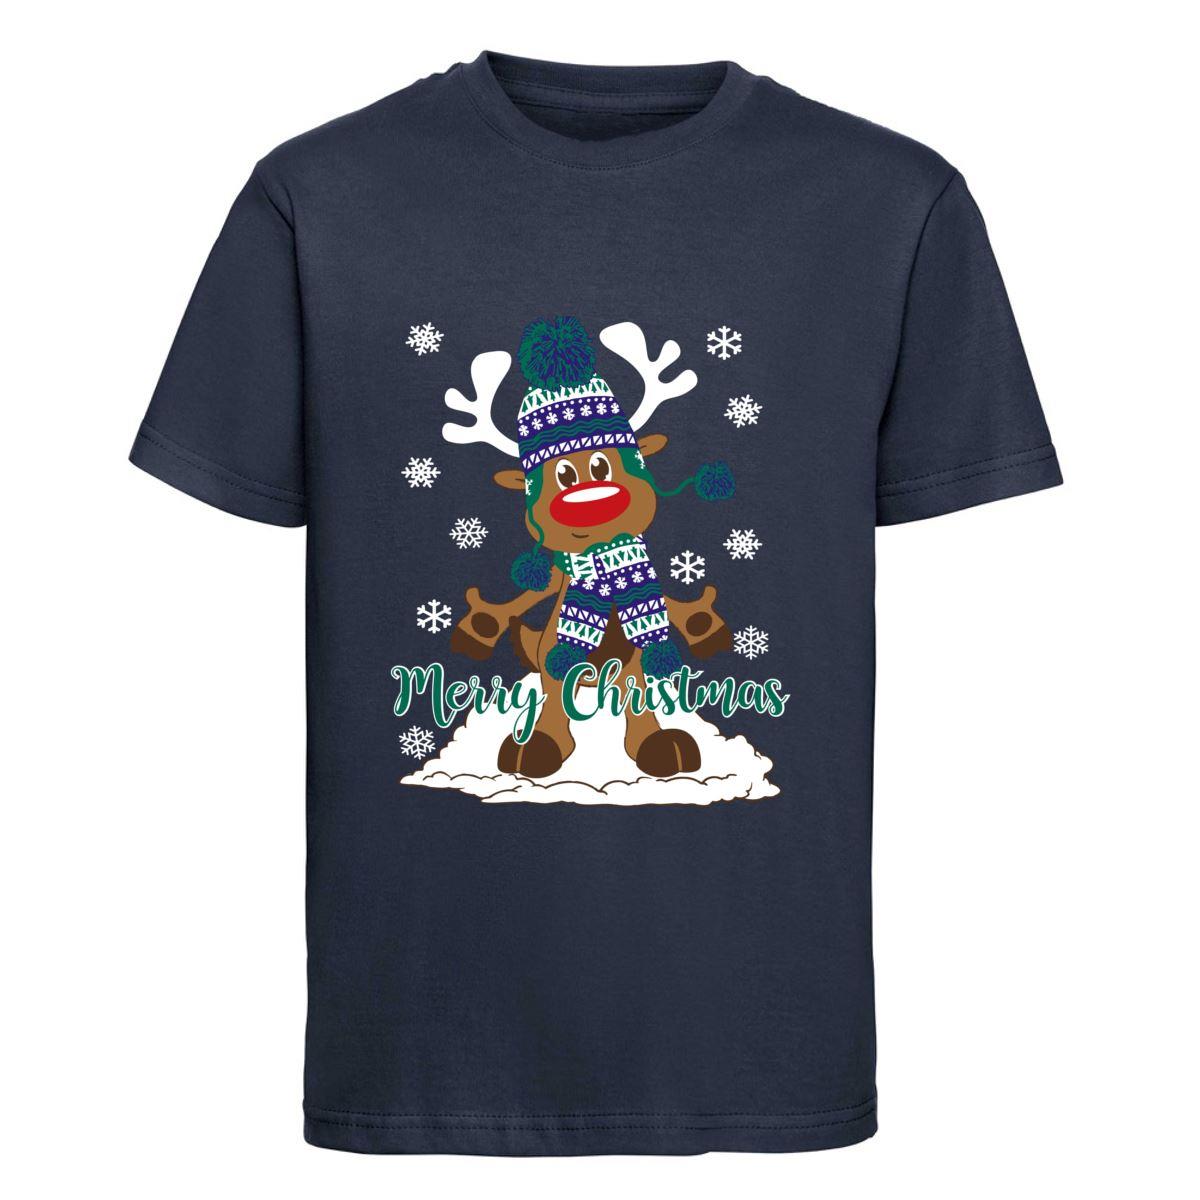 Unisex Kids Christmas Xmas T-shirts